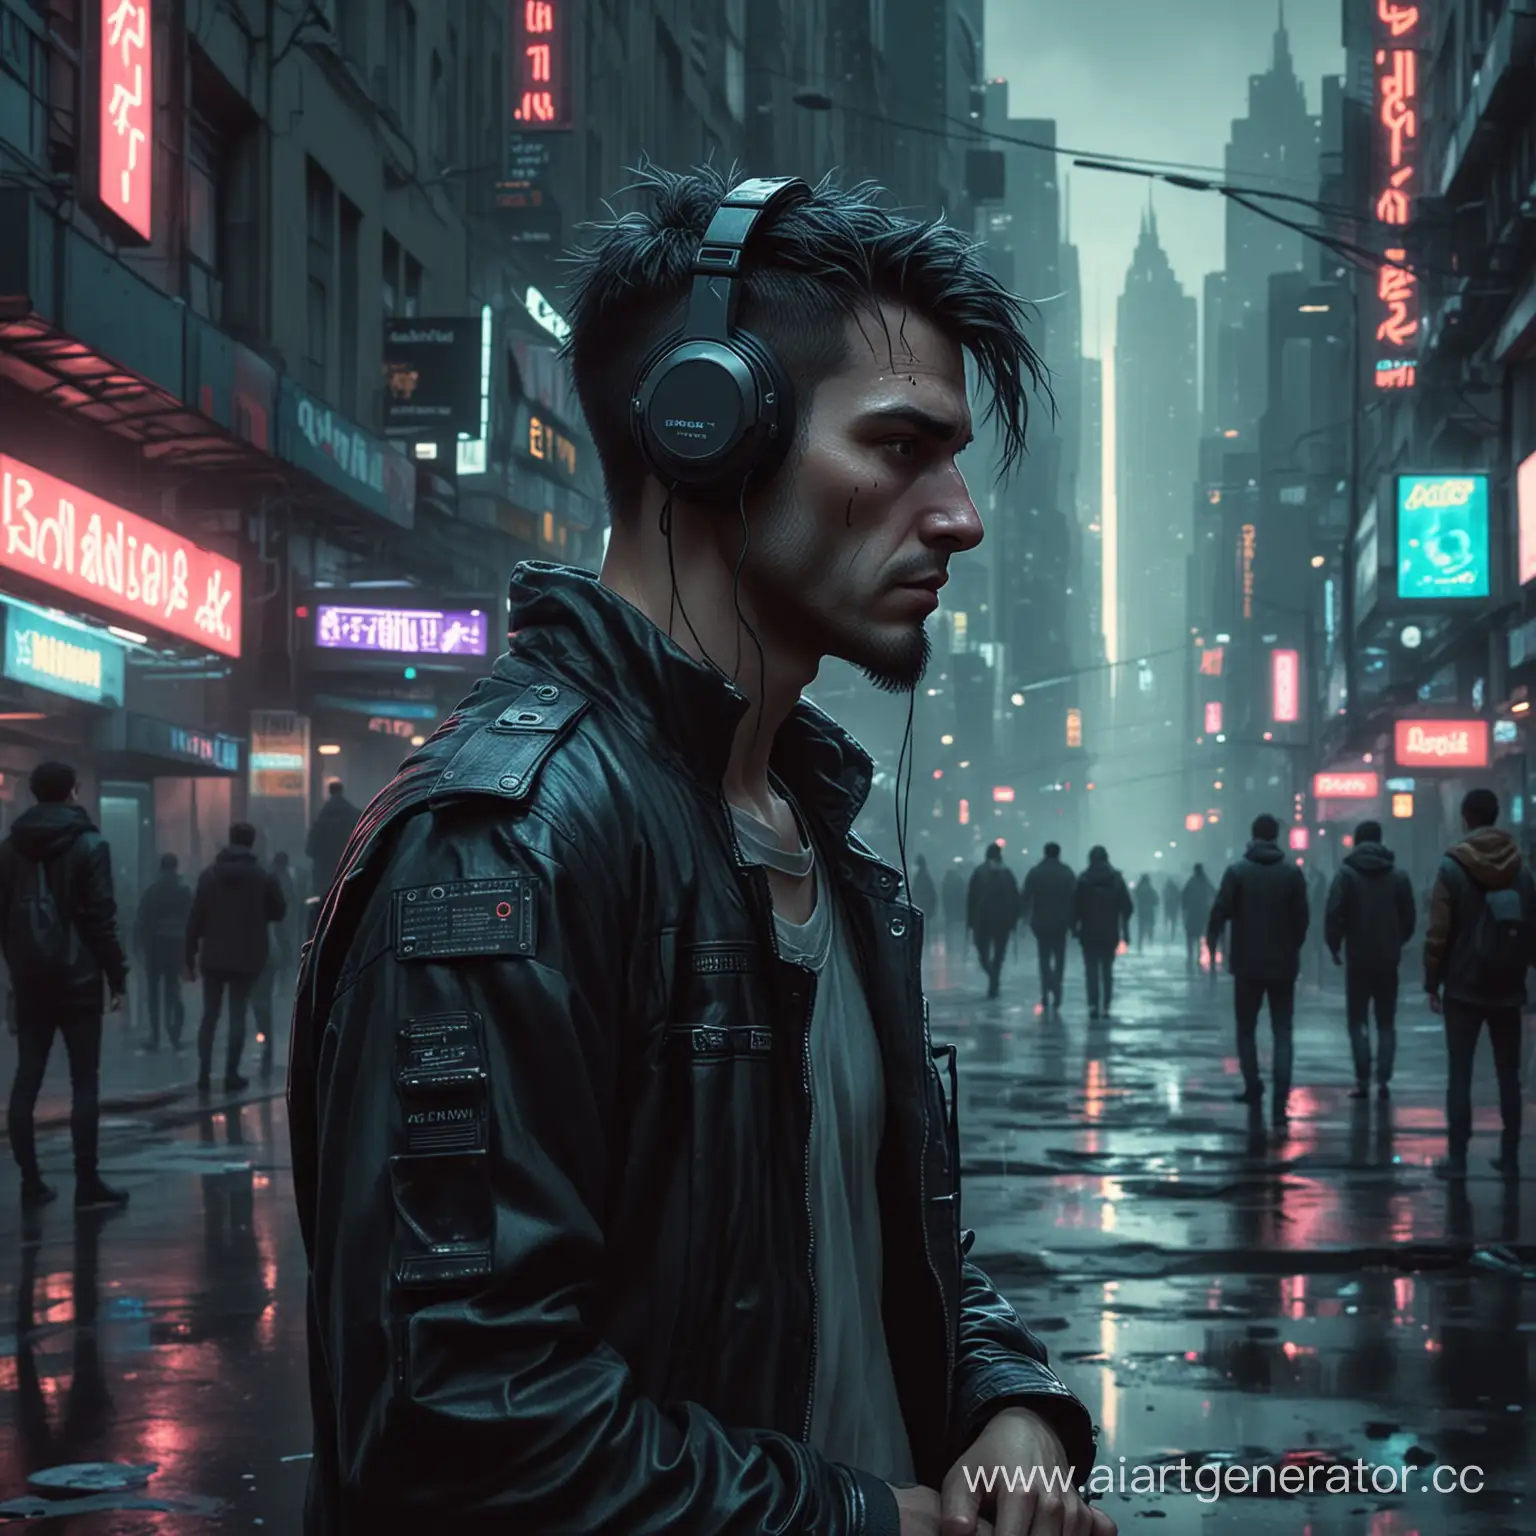 Lonely-PostPunk-Man-in-Cyberpunk-City-Street